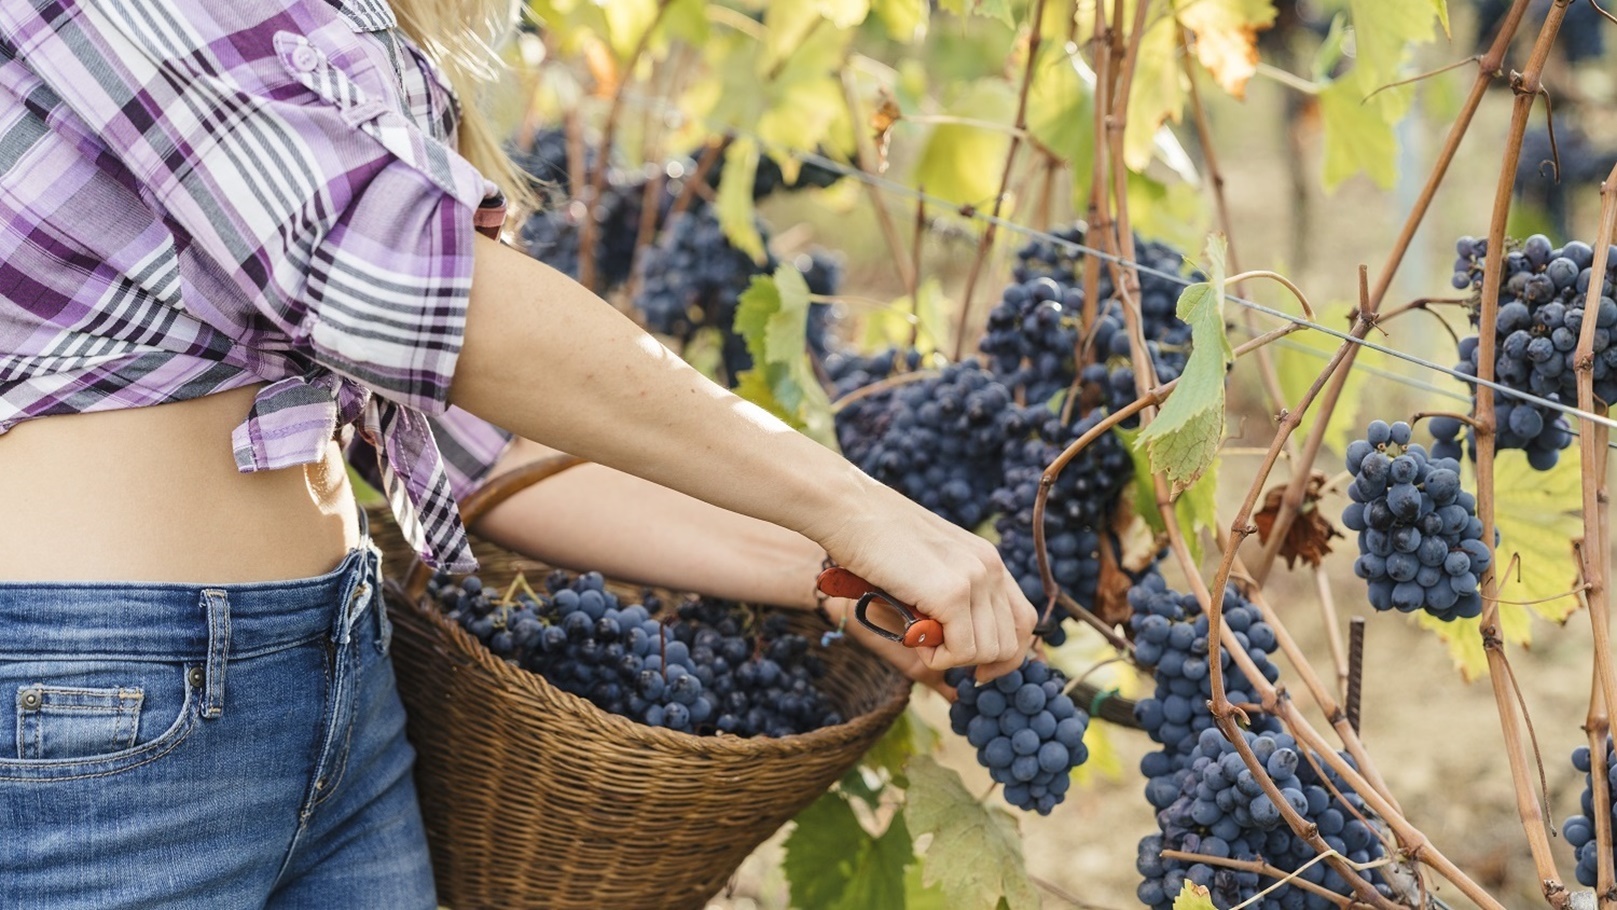 group-of-people-harvesting-grapes-in-a-vineyard-2021-08-26-20-17-48-utc